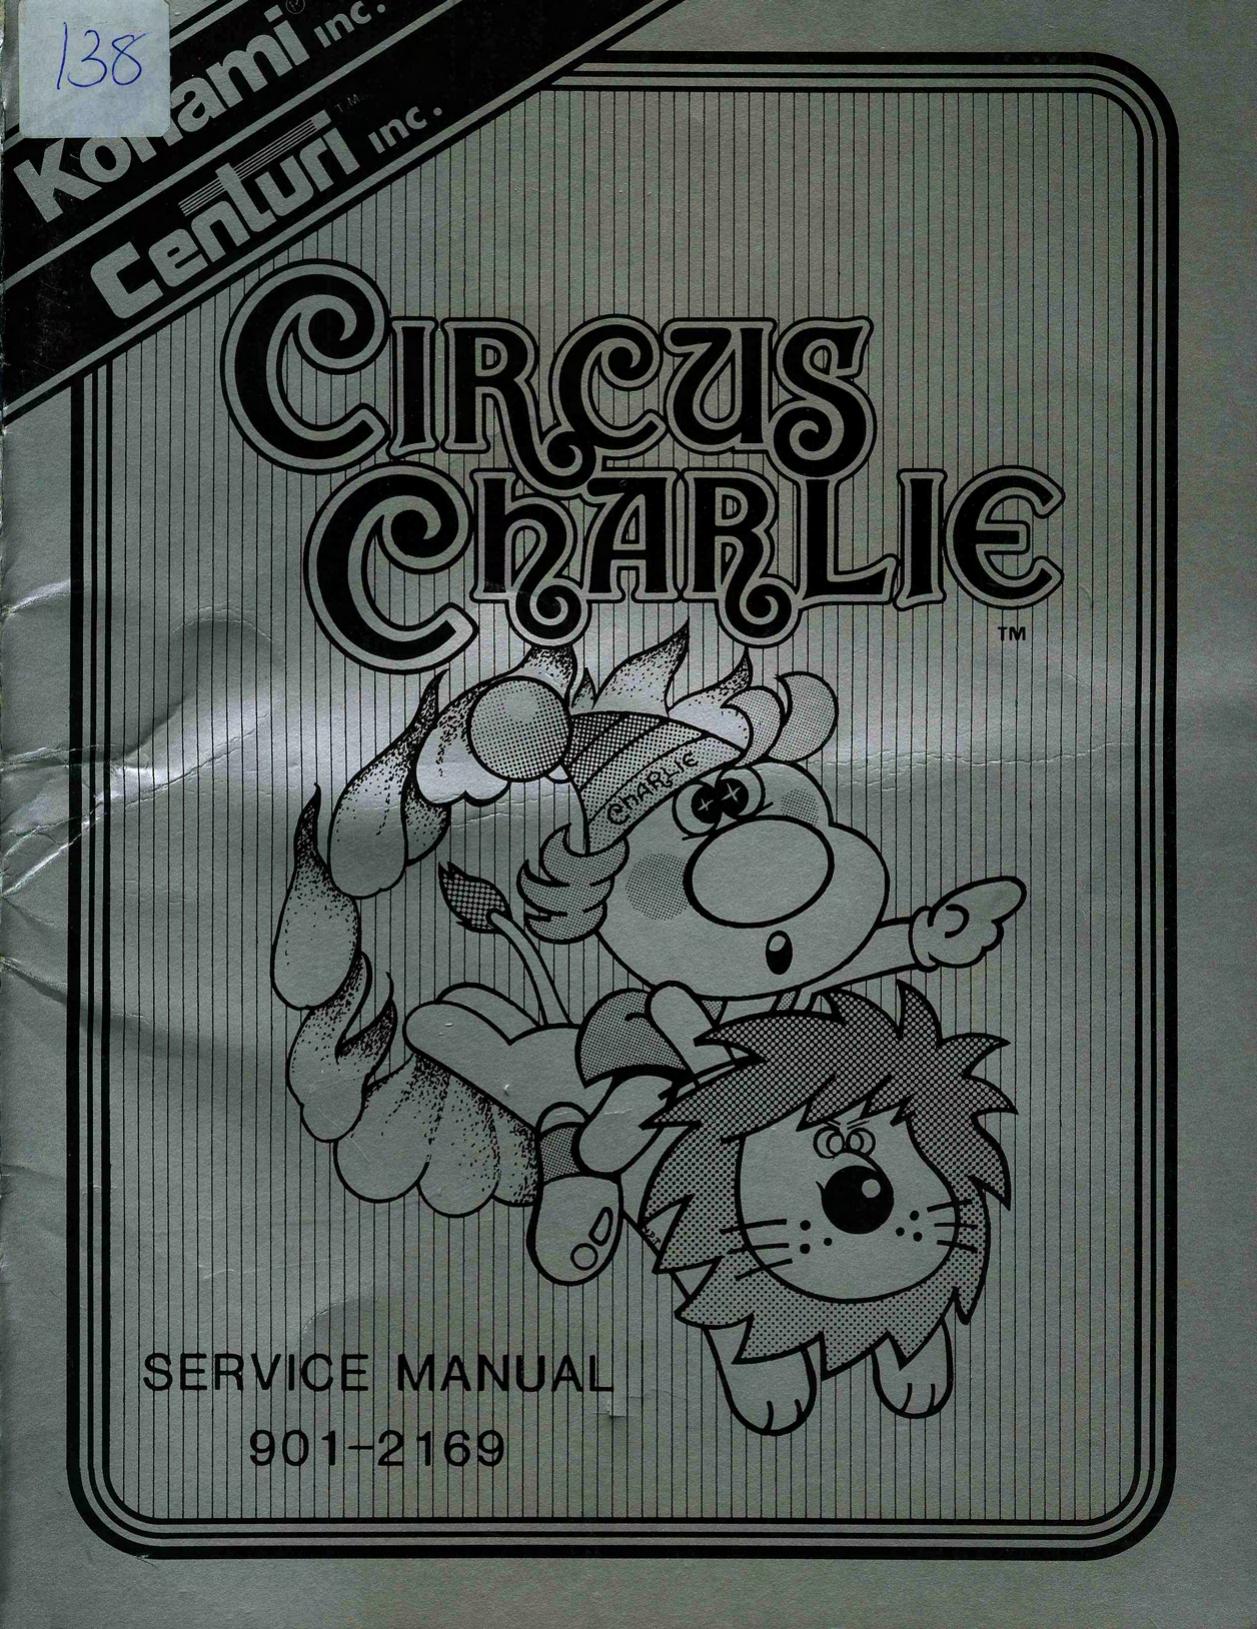 Circus Charlie Service Manual (901-2169)